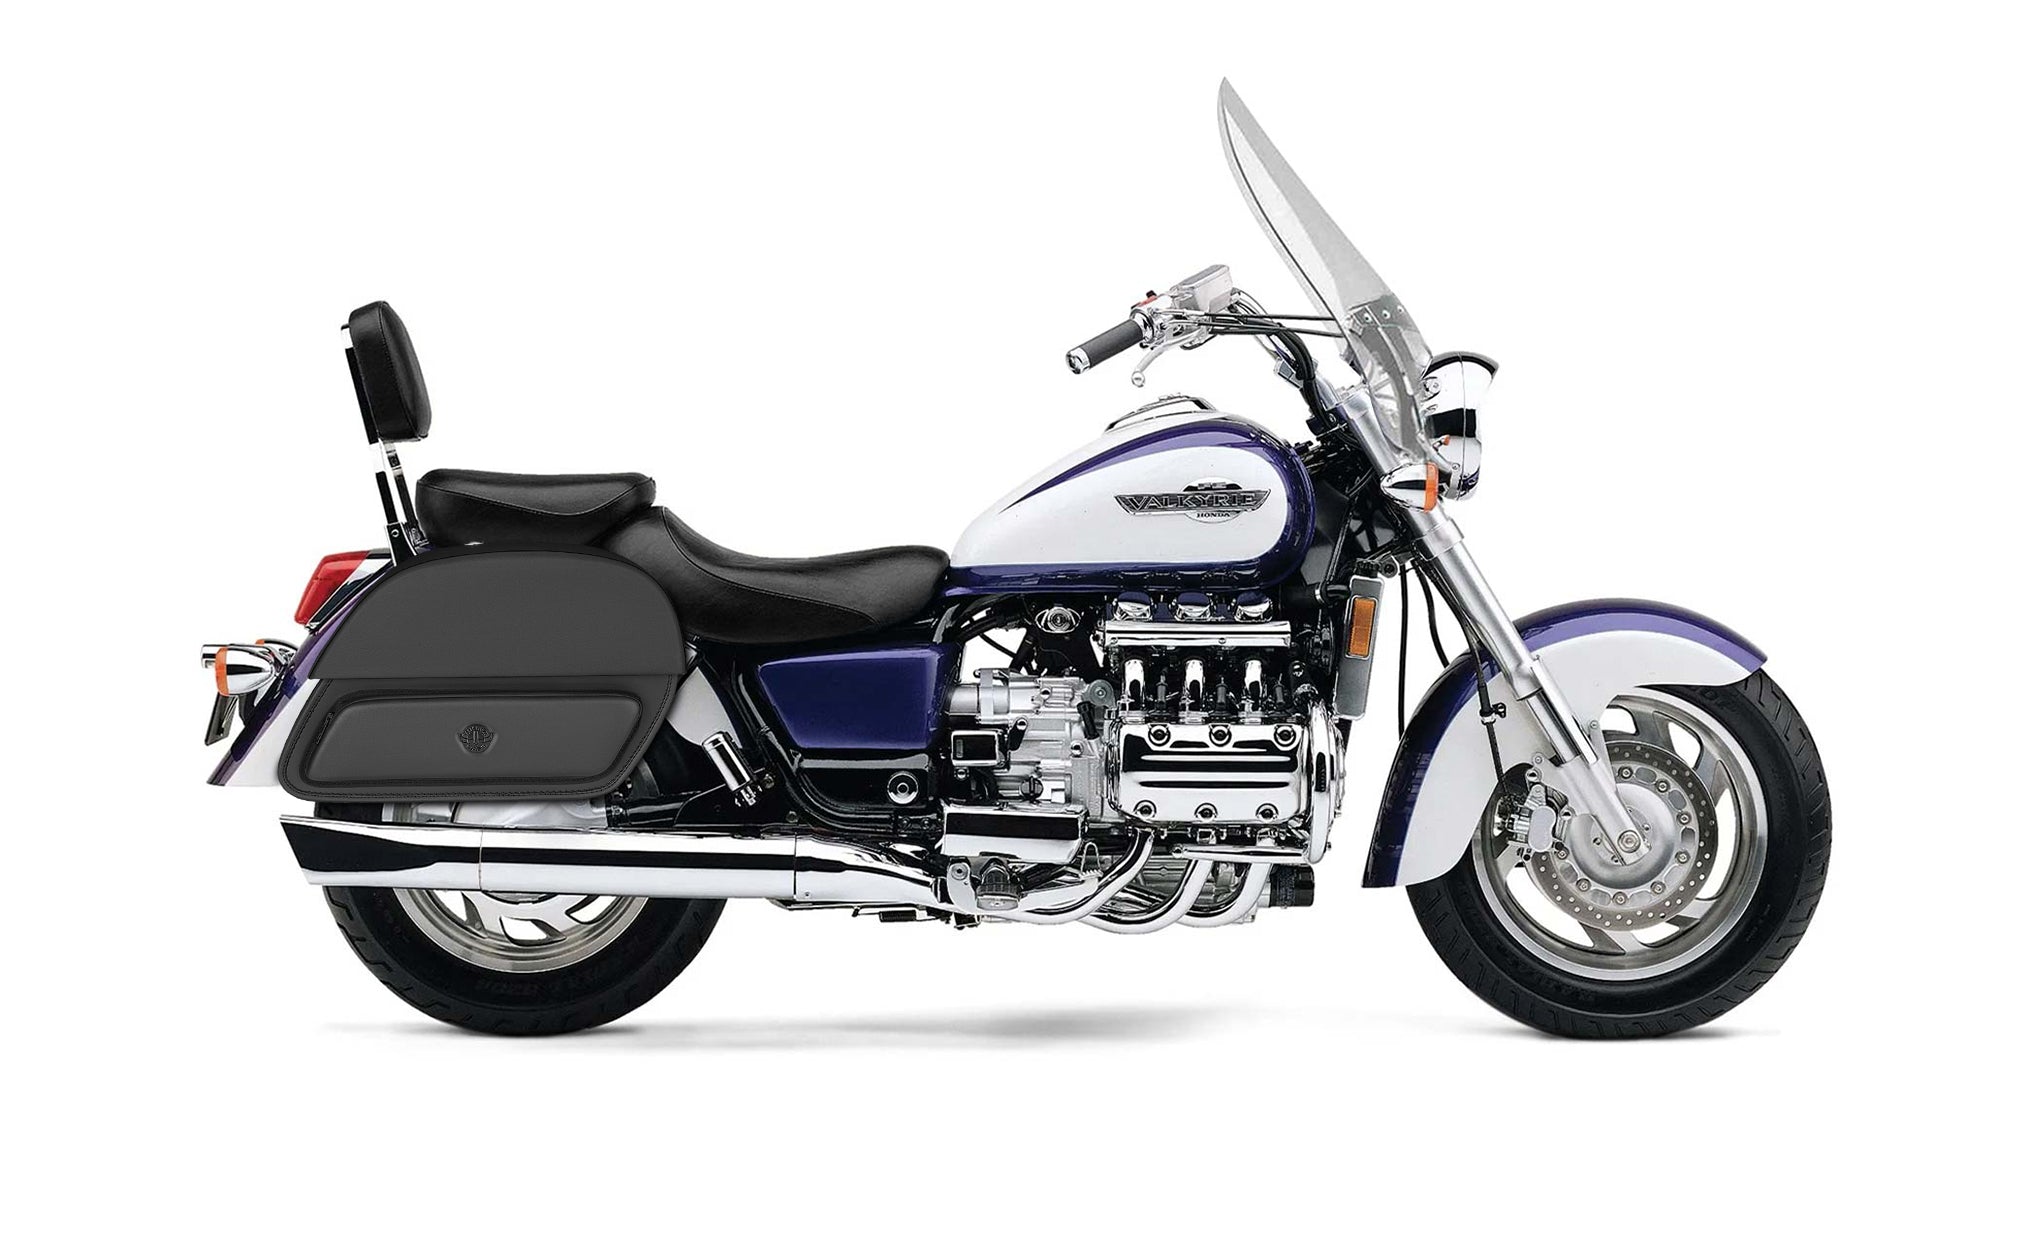 33L - Pantheon Large Honda Valkyrie 1500 Tourer Motorcycle Saddlebags on Bike Photo @expand